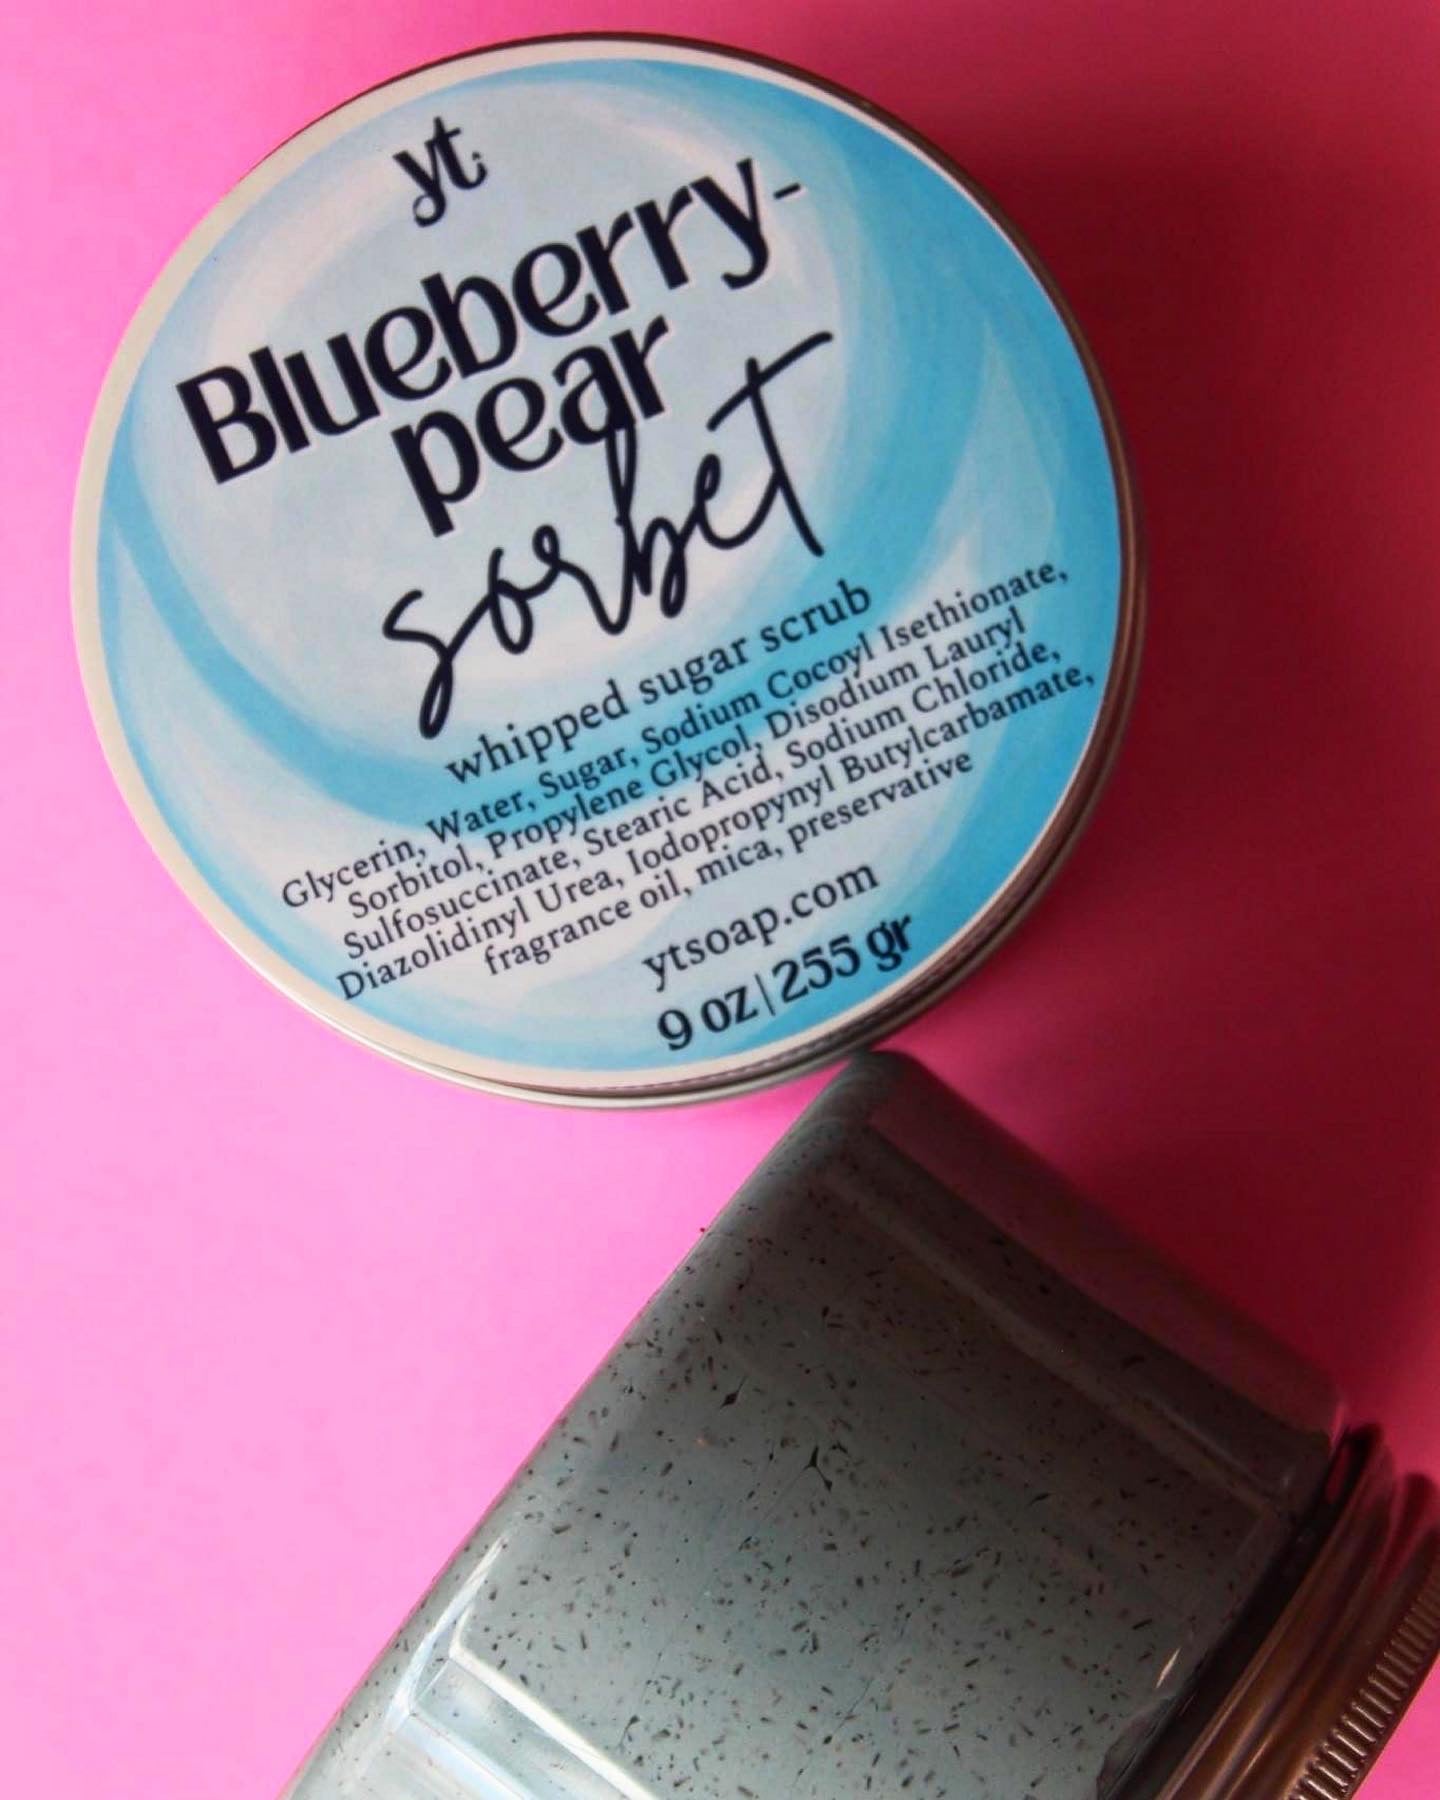 Blueberry-Pear Sorbet, whipped sugar scrub soap